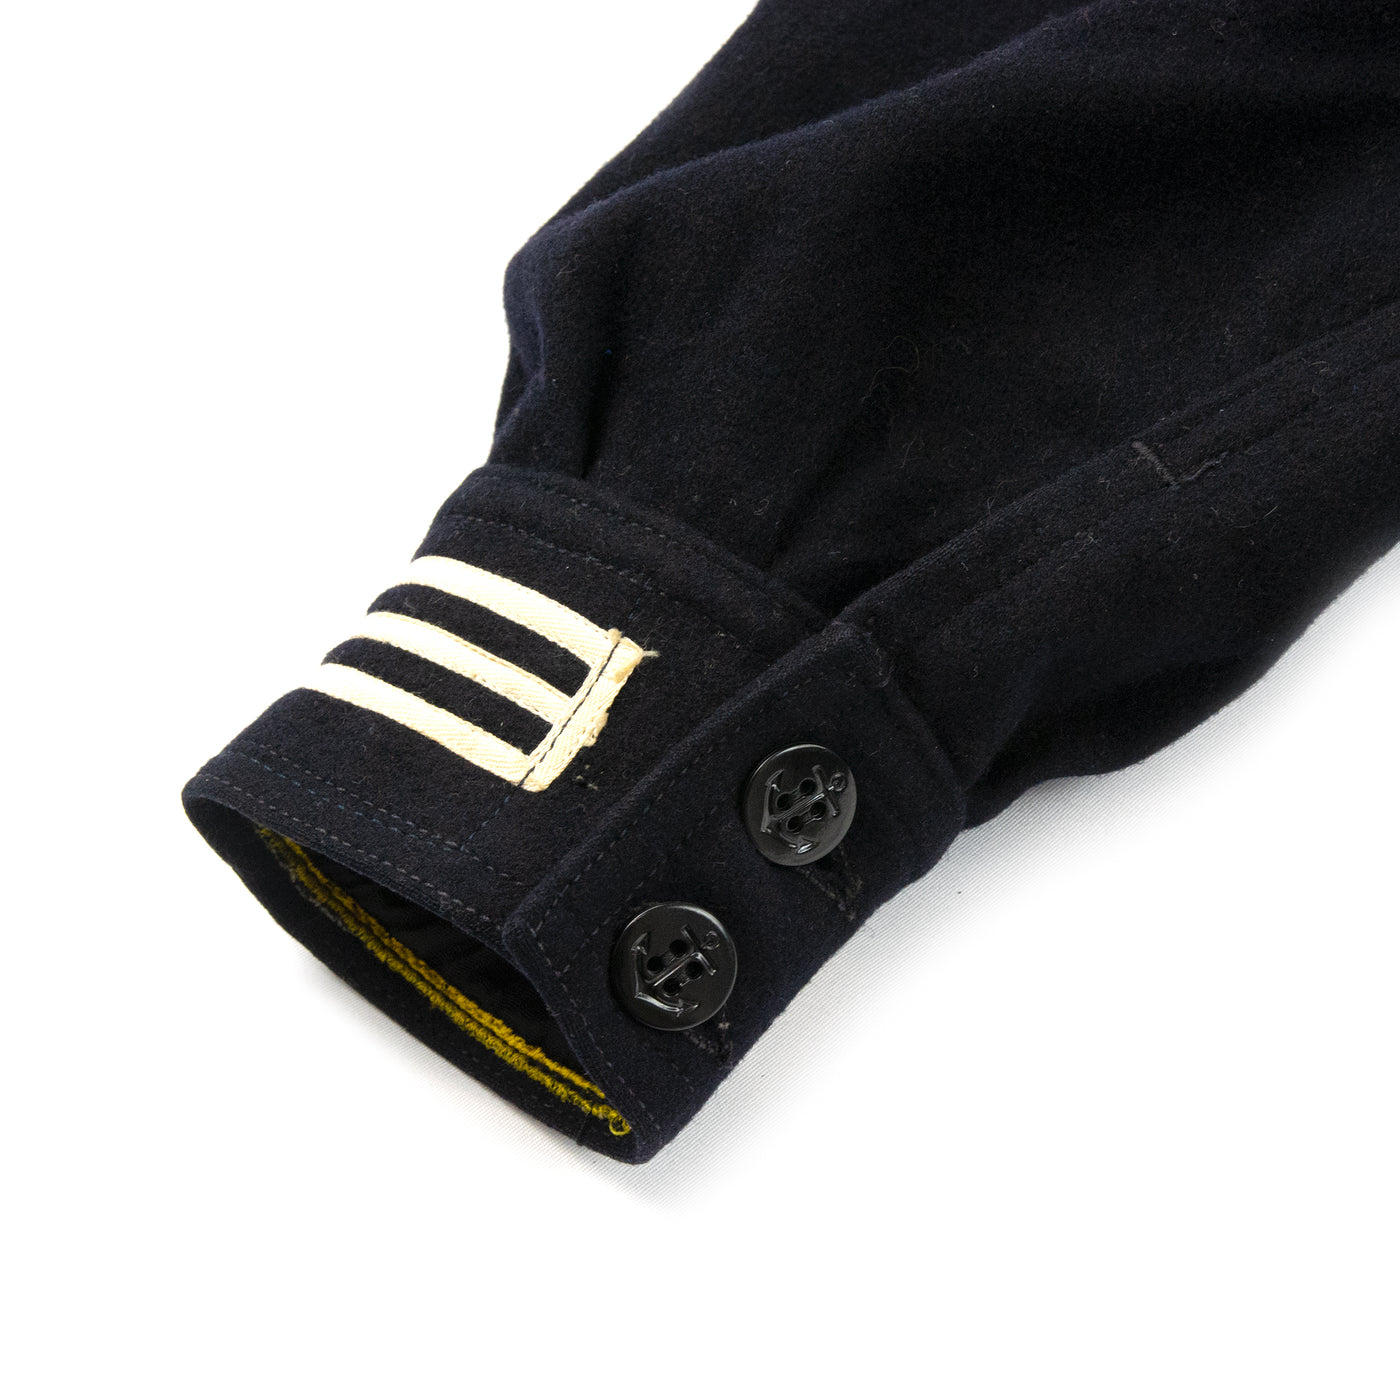 Vintage 1940s WW2 Era US Navy Cracker Jack Military Wool Shirt - XS Cuffs